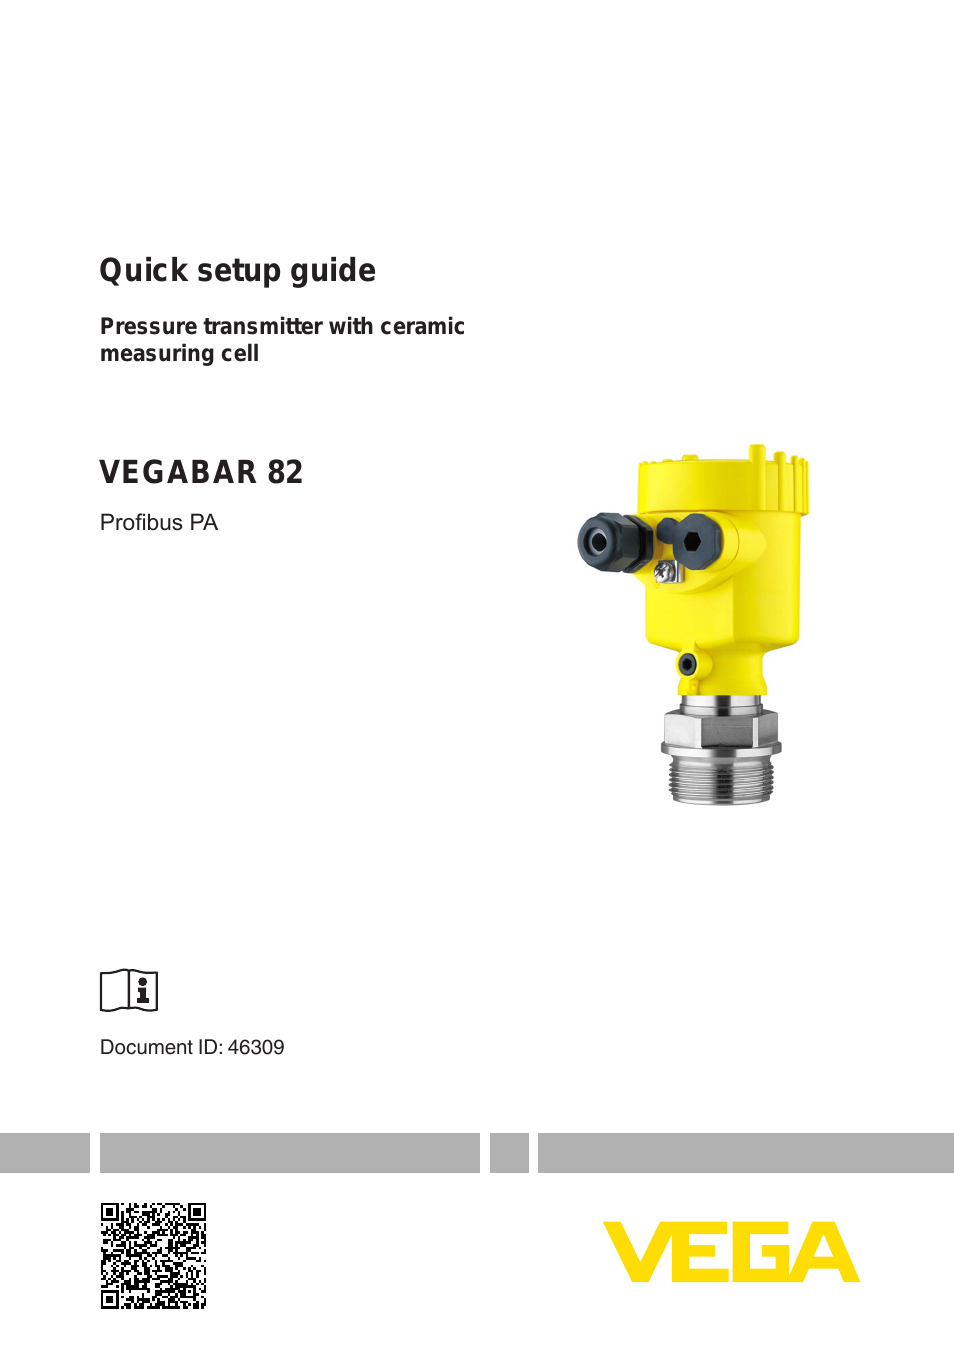 VEGABAR 82 Profibus PA - Quick setup guide